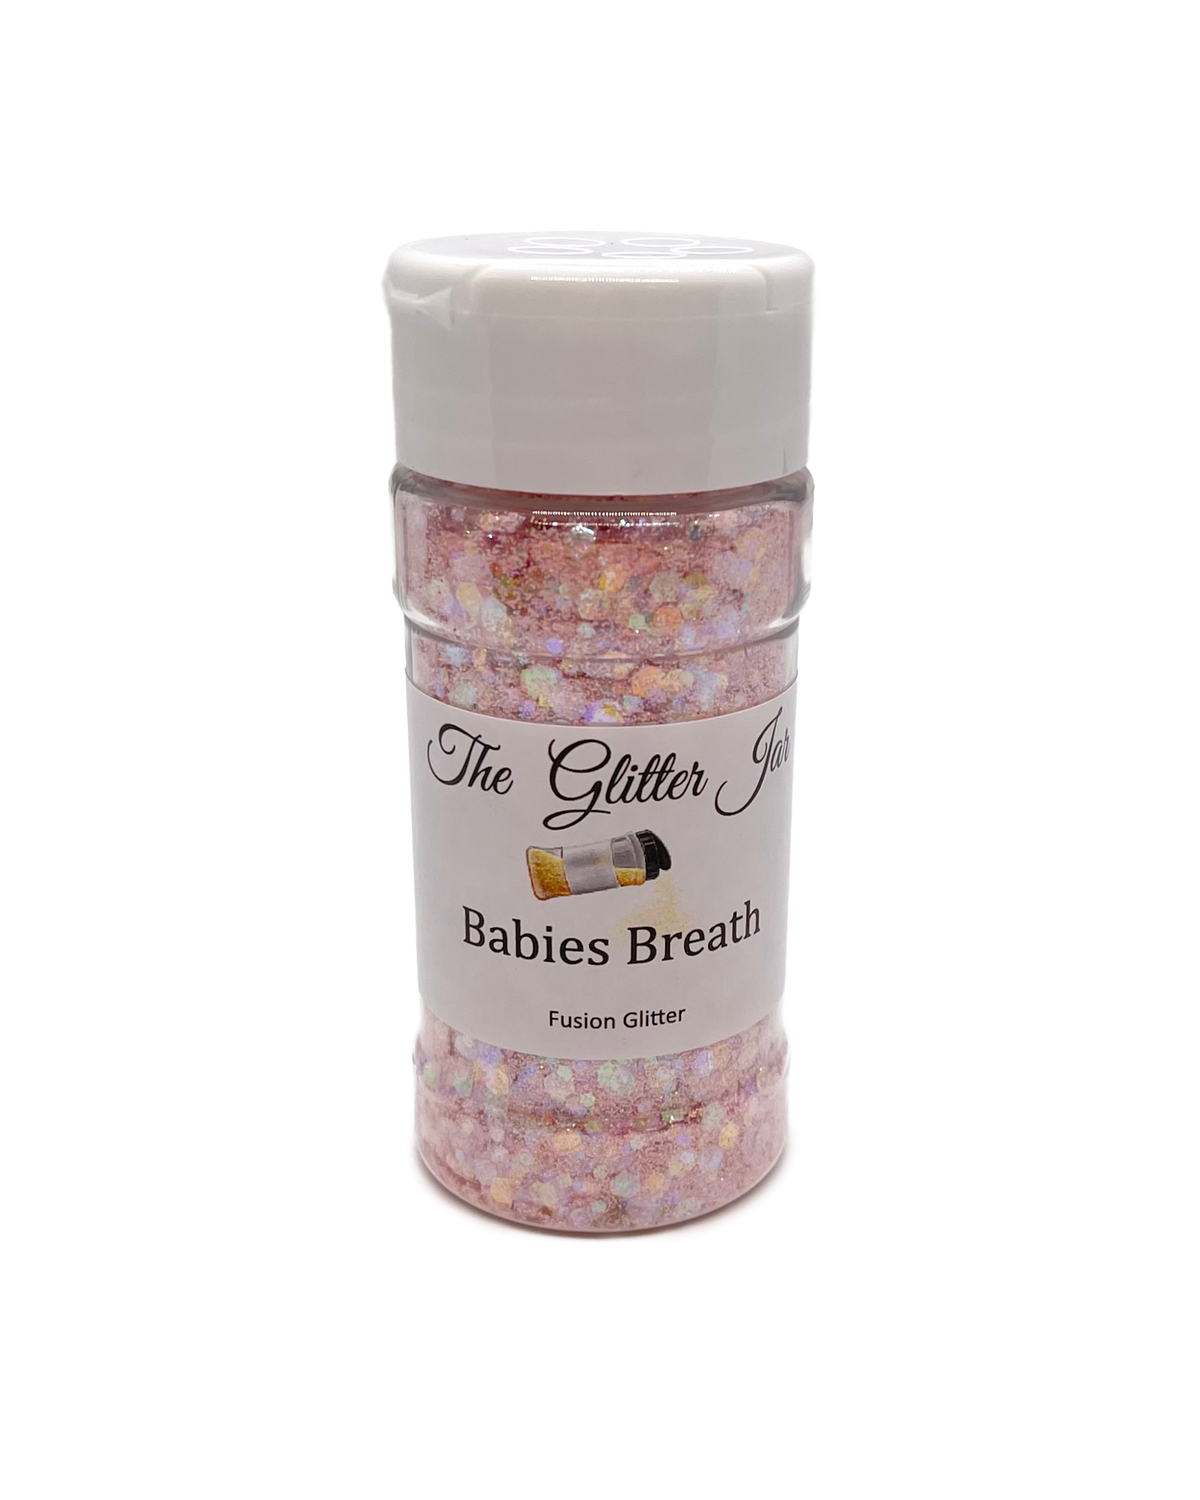 Babies Breath Fusion Glitter The Glitter Jar